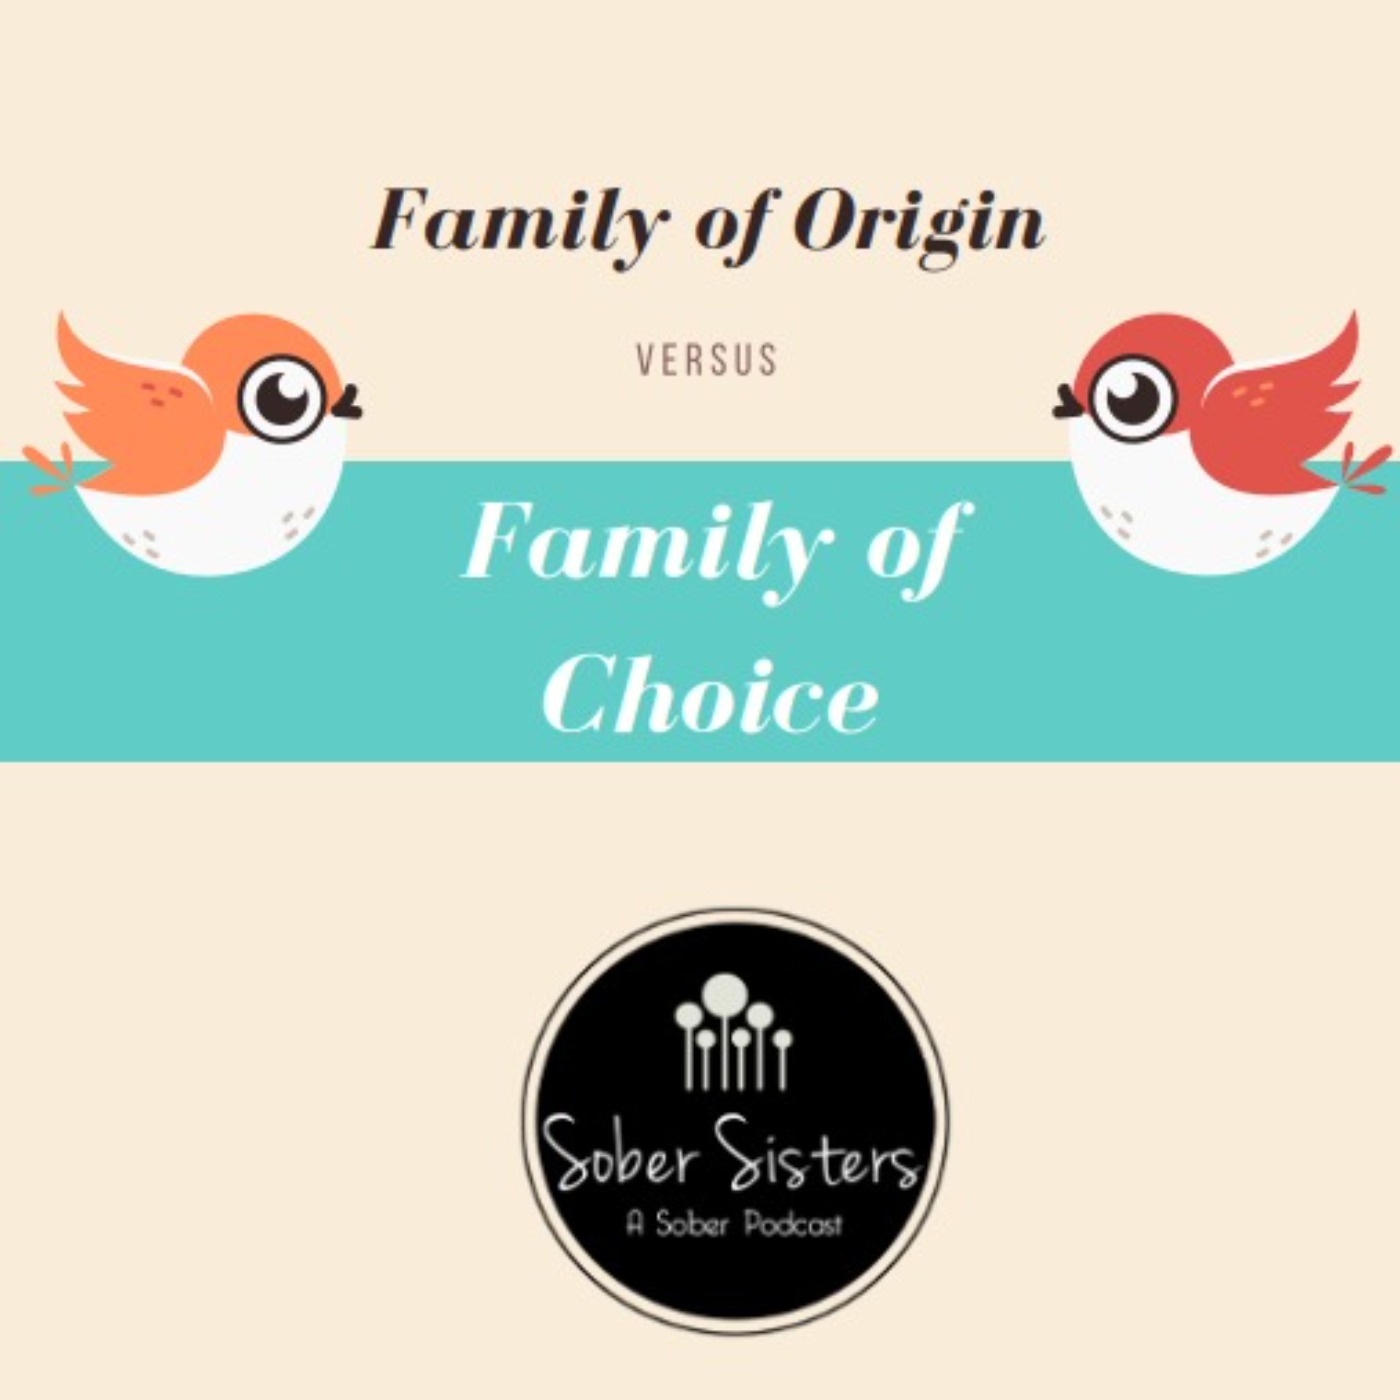 Family of Origin versus Family of Choice